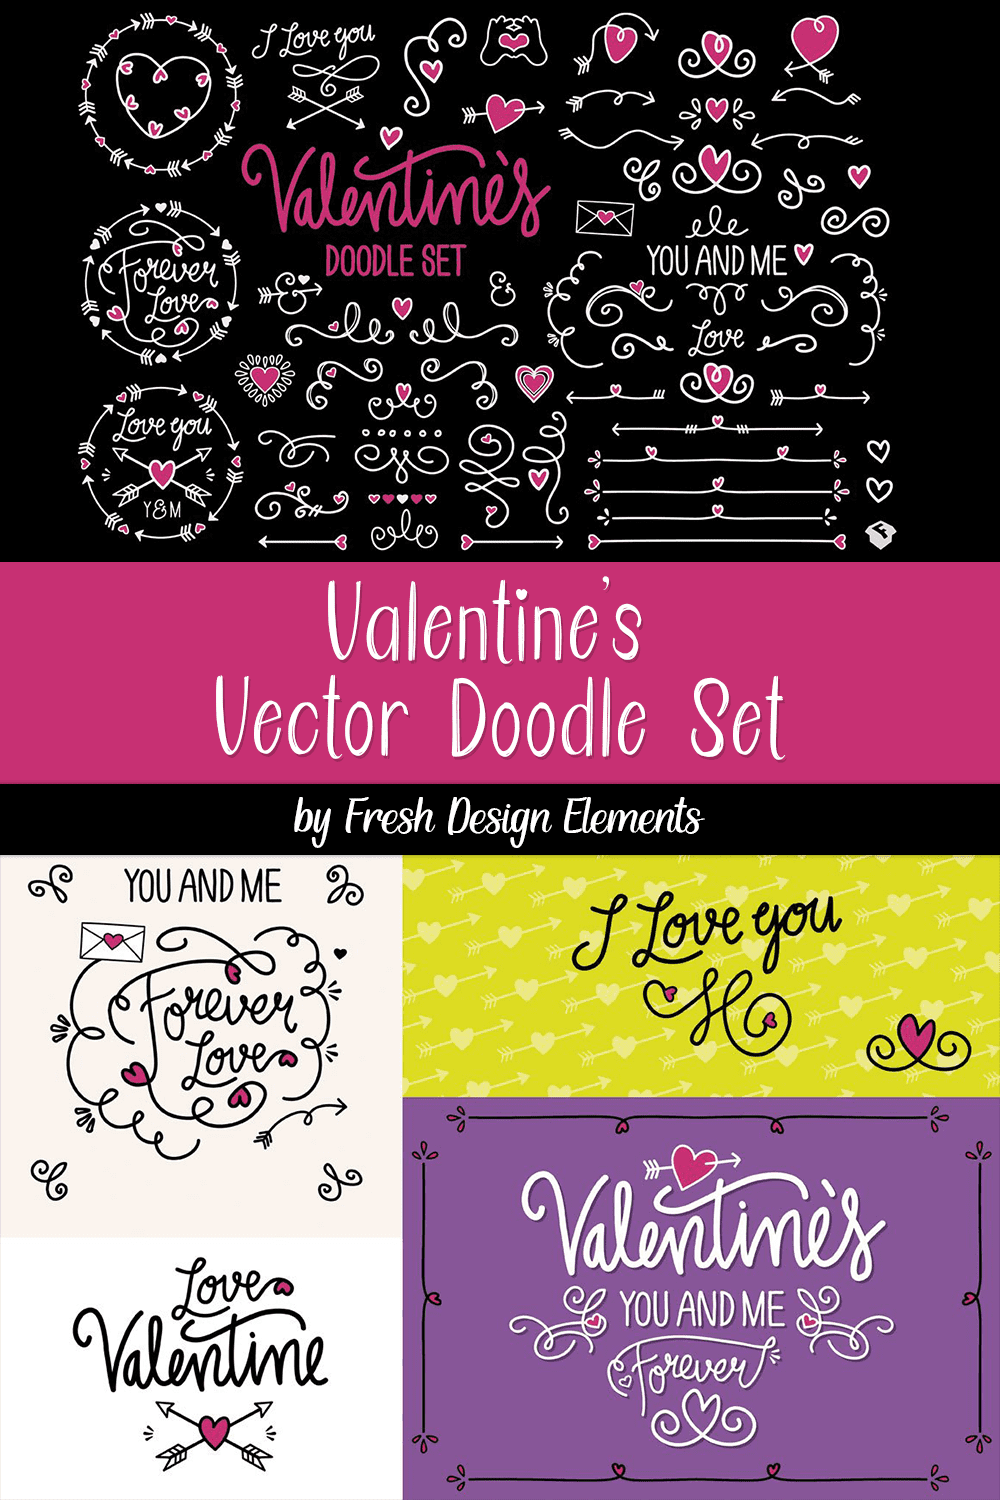 Valentine's Vector Doodle Set - Pinterest.